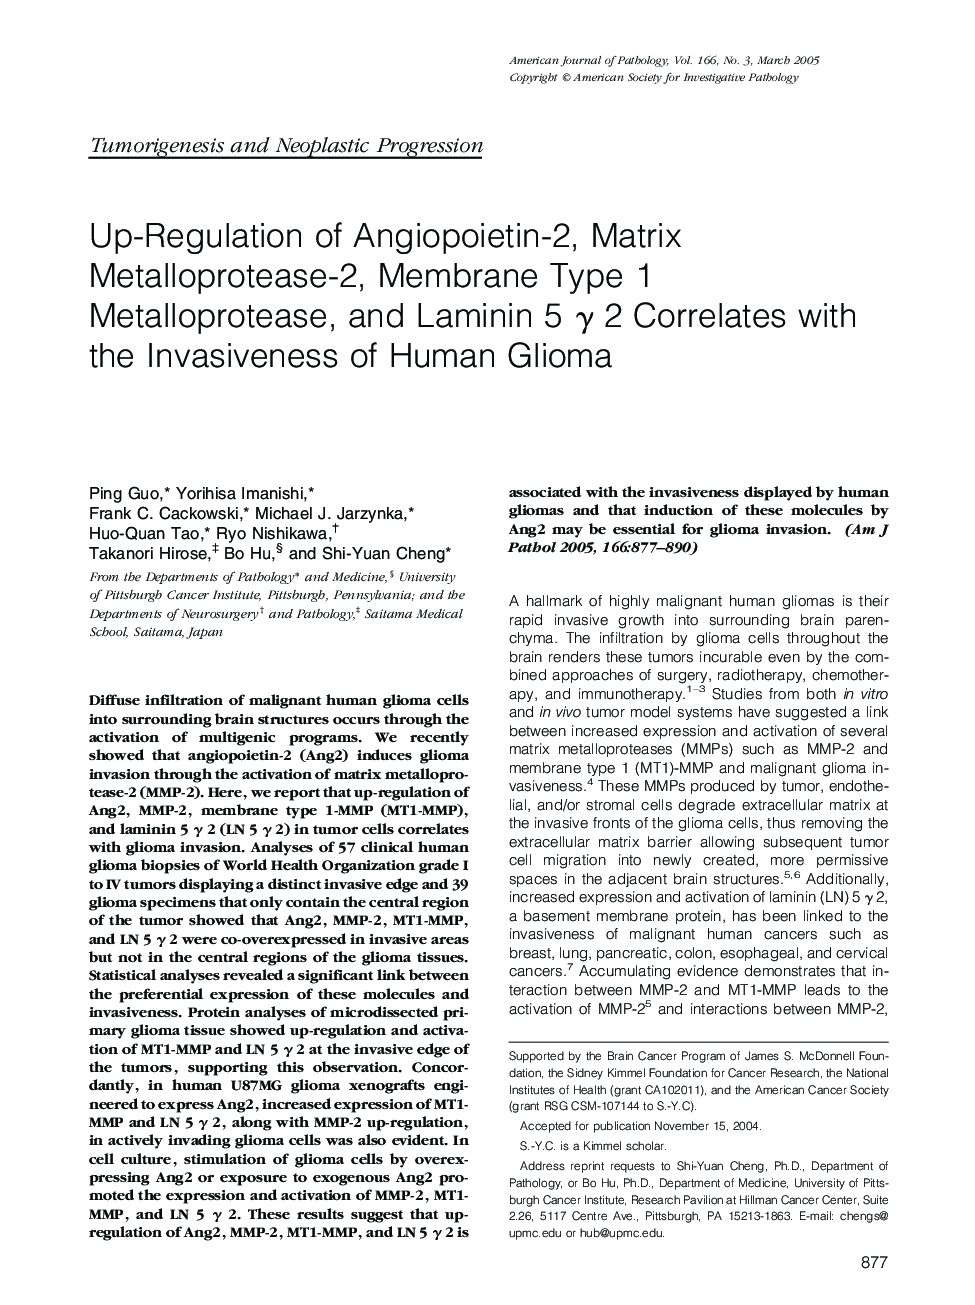 Up-Regulation of Angiopoietin-2, Matrix Metalloprotease-2, Membrane Type 1 Metalloprotease, and Laminin 5 Î³ 2 Correlates with the Invasiveness of Human Glioma